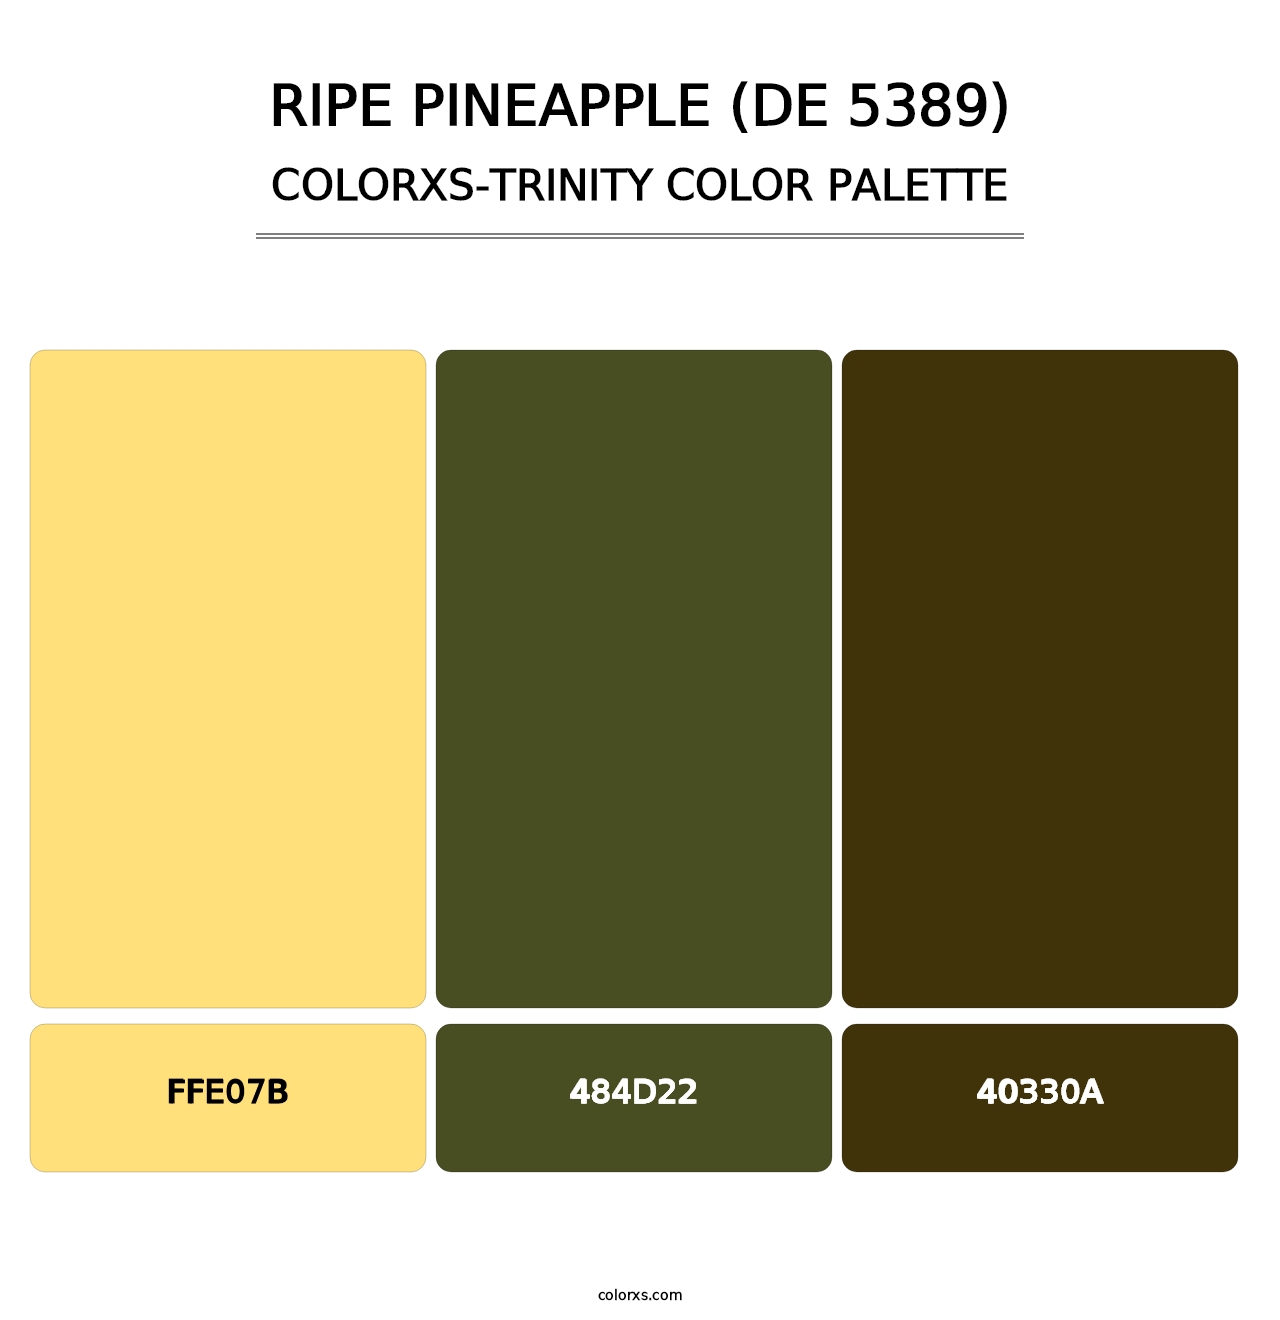 Ripe Pineapple (DE 5389) - Colorxs Trinity Palette